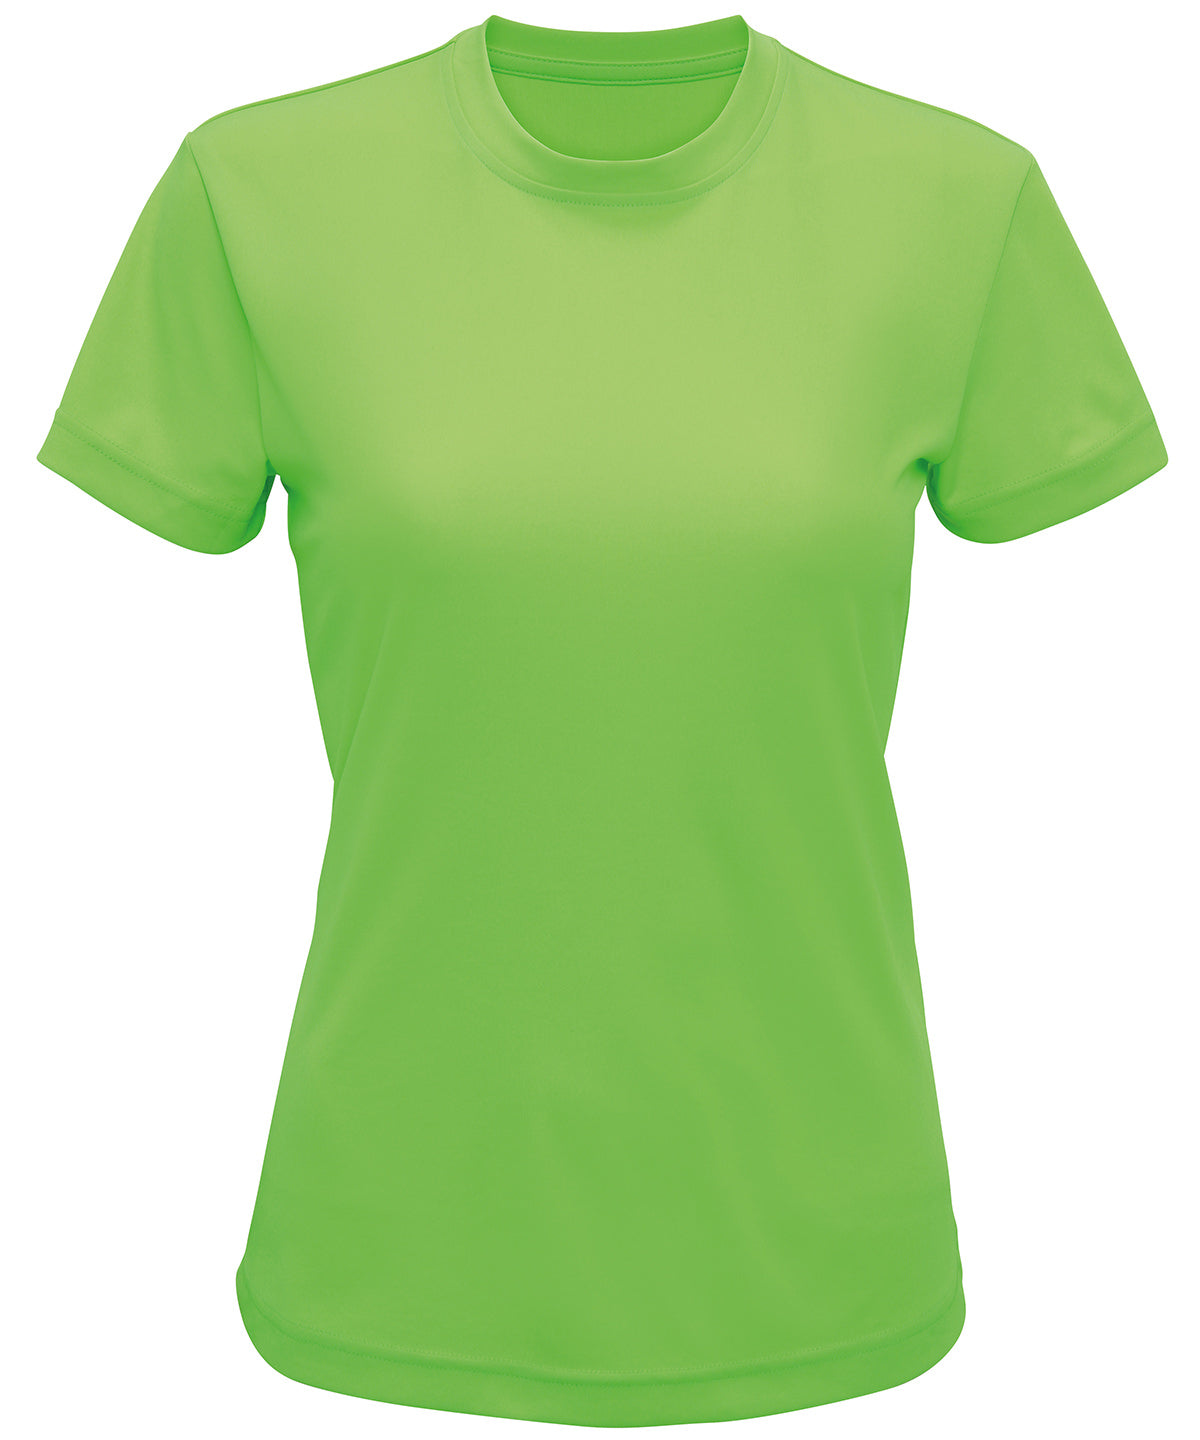 TriDri Womens Recycled Performance T-Shirt